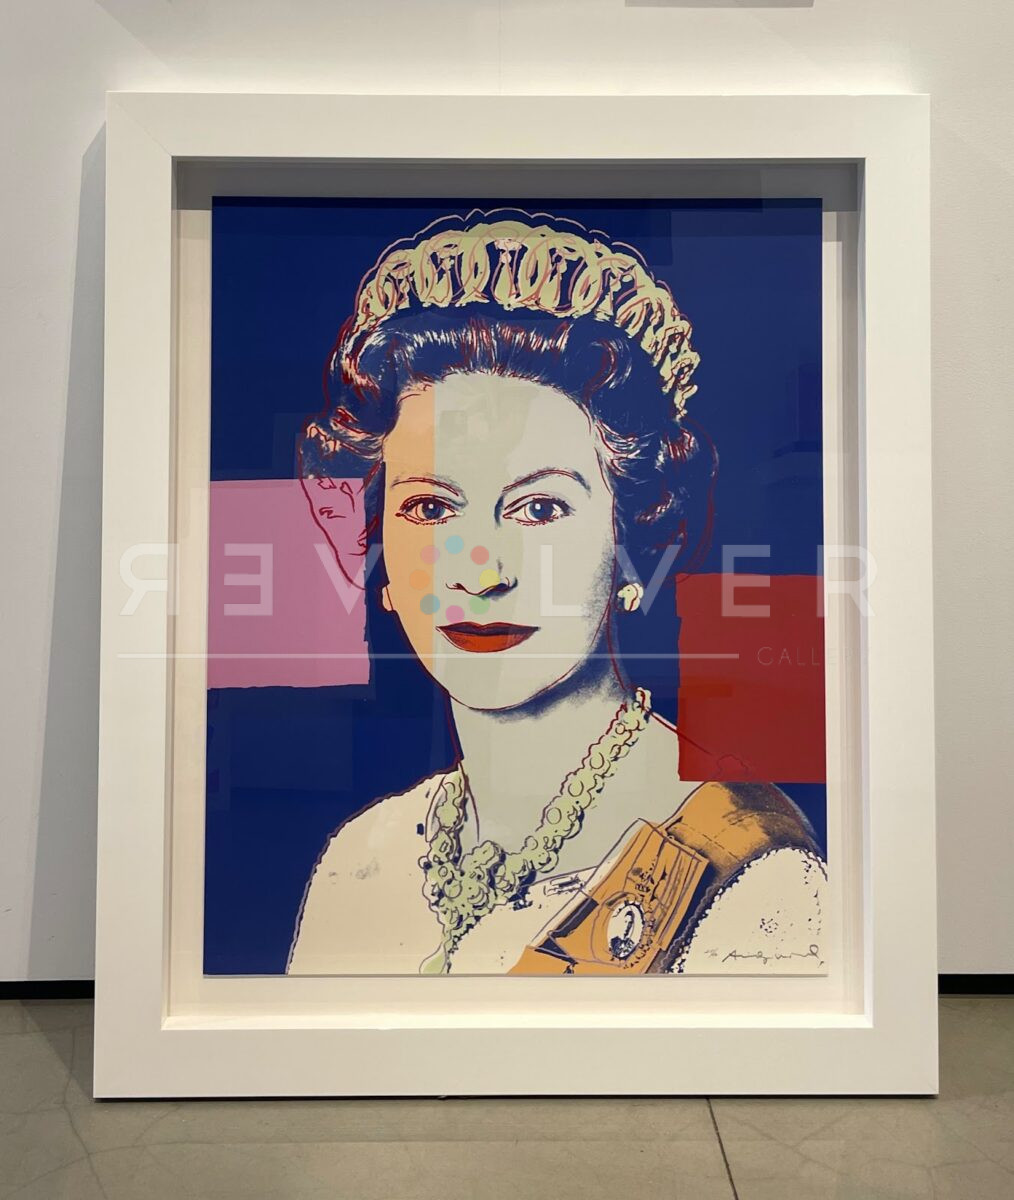 Andy Warhol's Queen Elizabeth II 337 (Blue Queen) in frame inside the gallery.